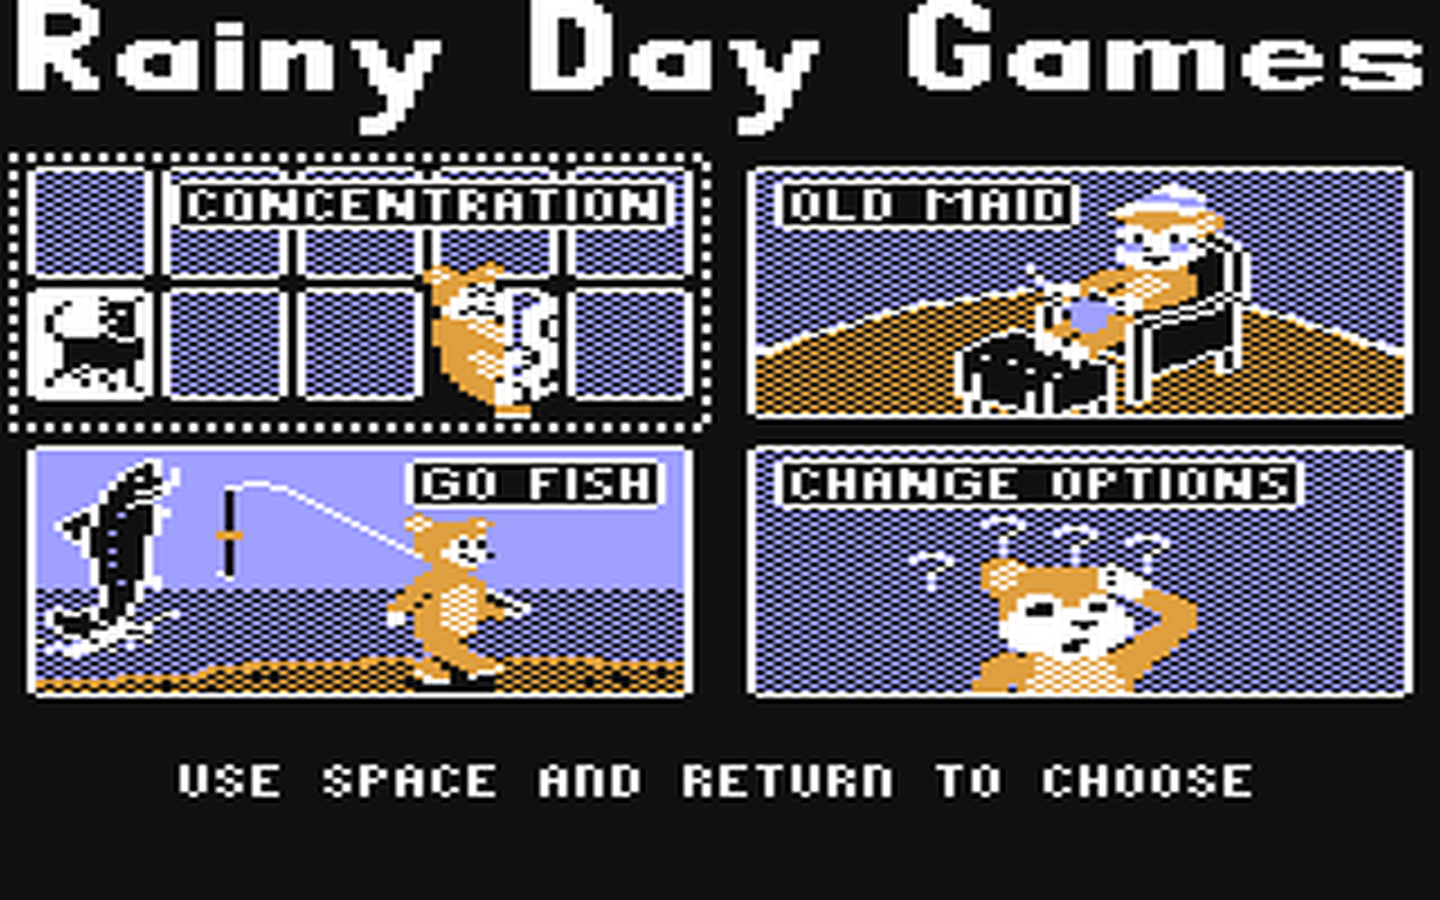 C64 GameBase Rainy_Day_Games Baudville 1987